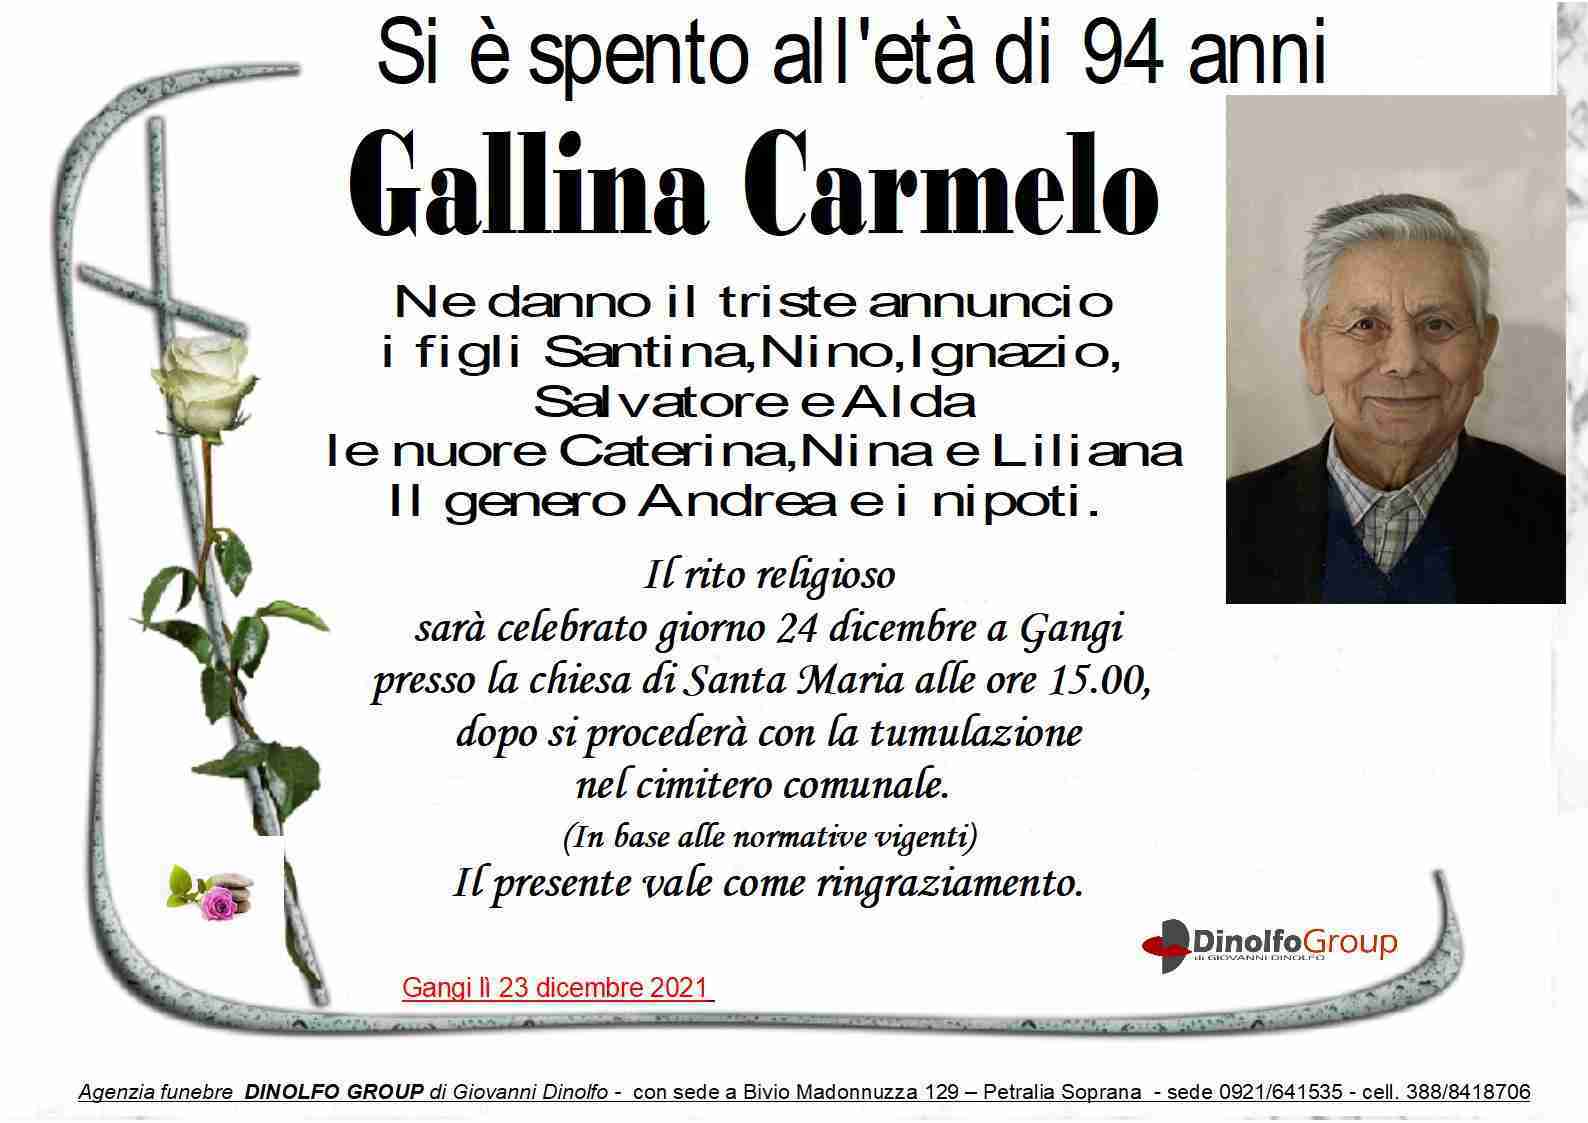 Carmelo Gallina